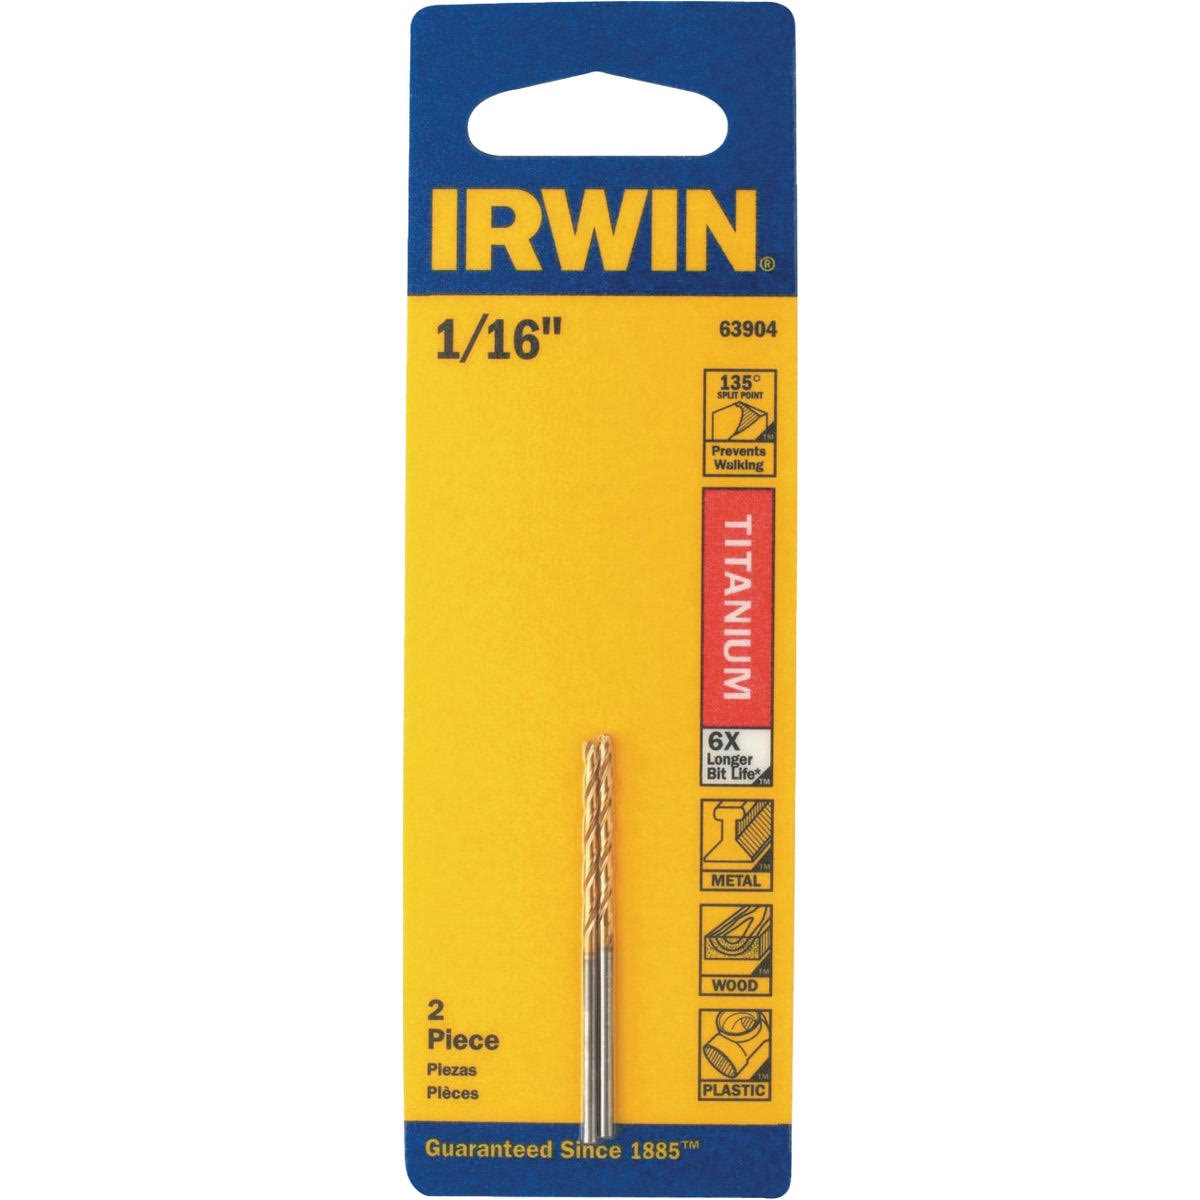 Irwin Industrial Tool High Speed Steel Drill Bit - Titanium Nitride Coated